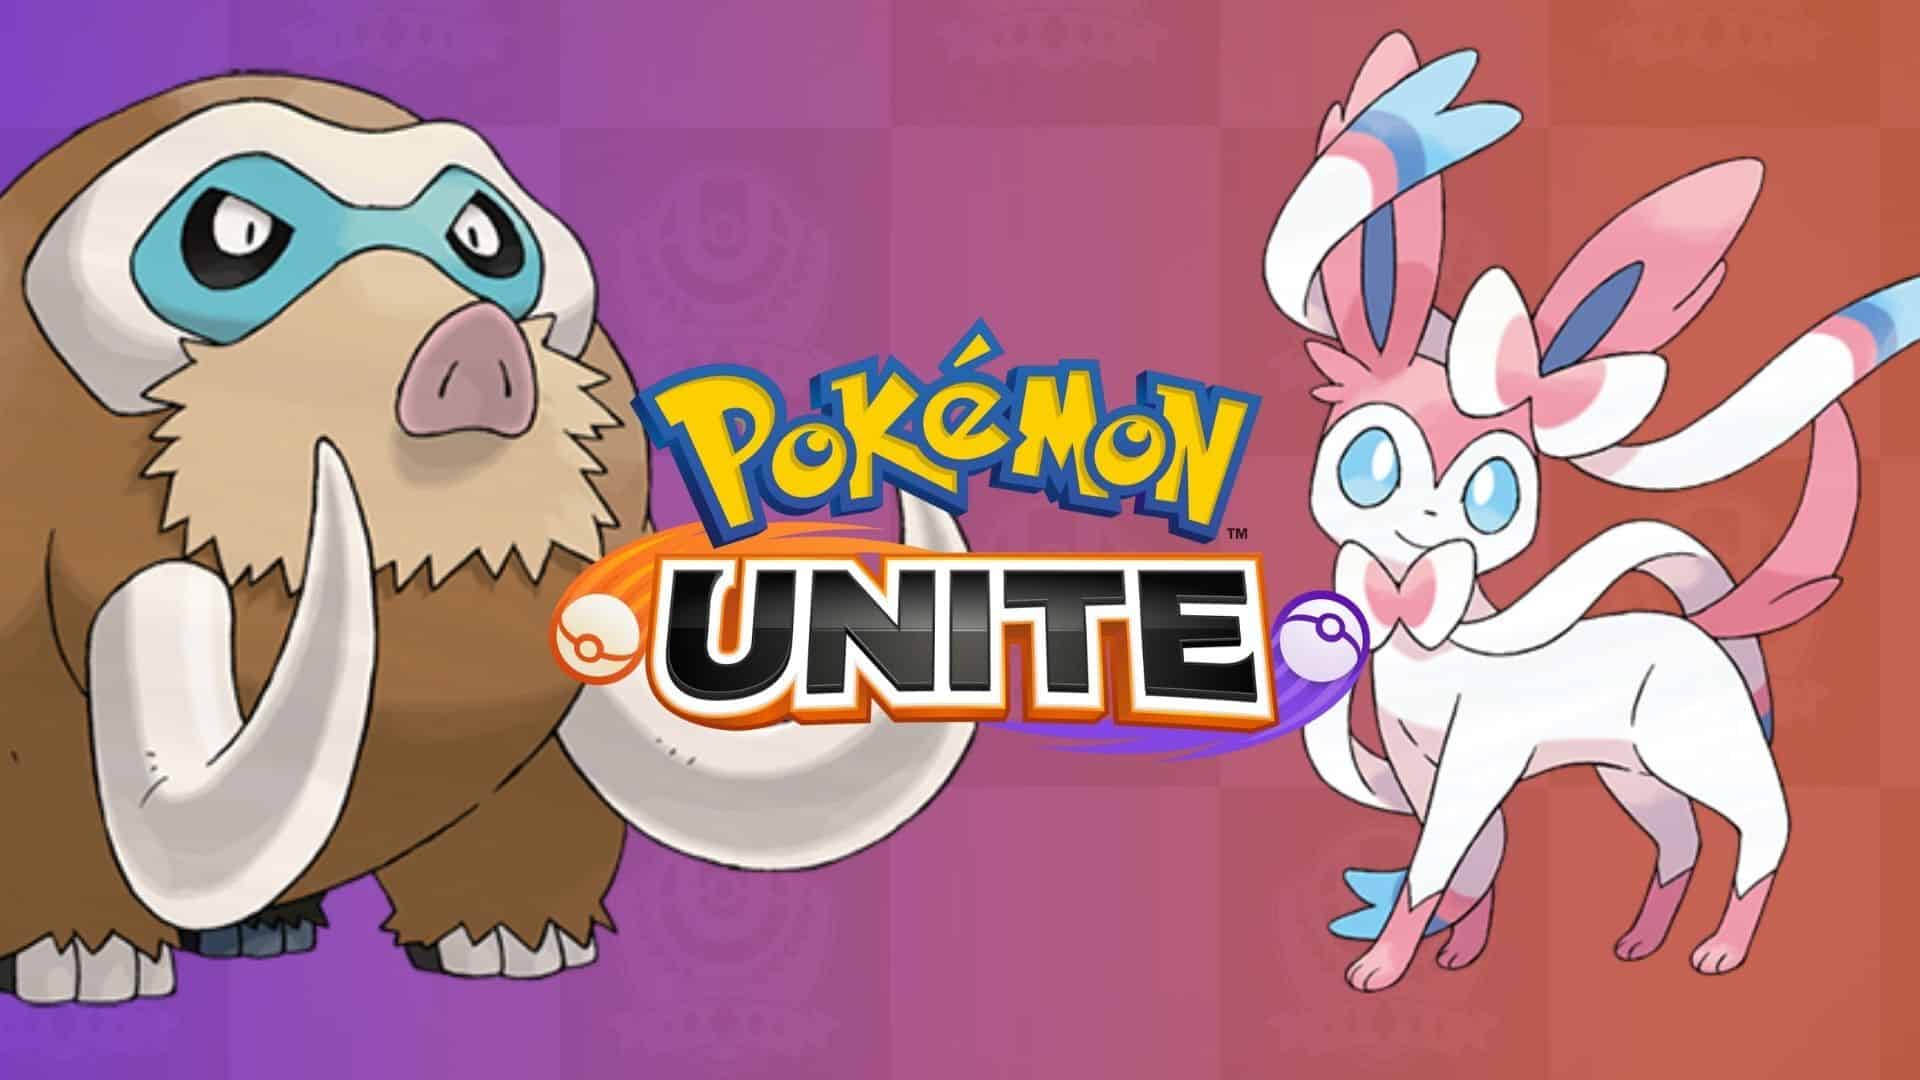 Pokémon Unite - Sylveon